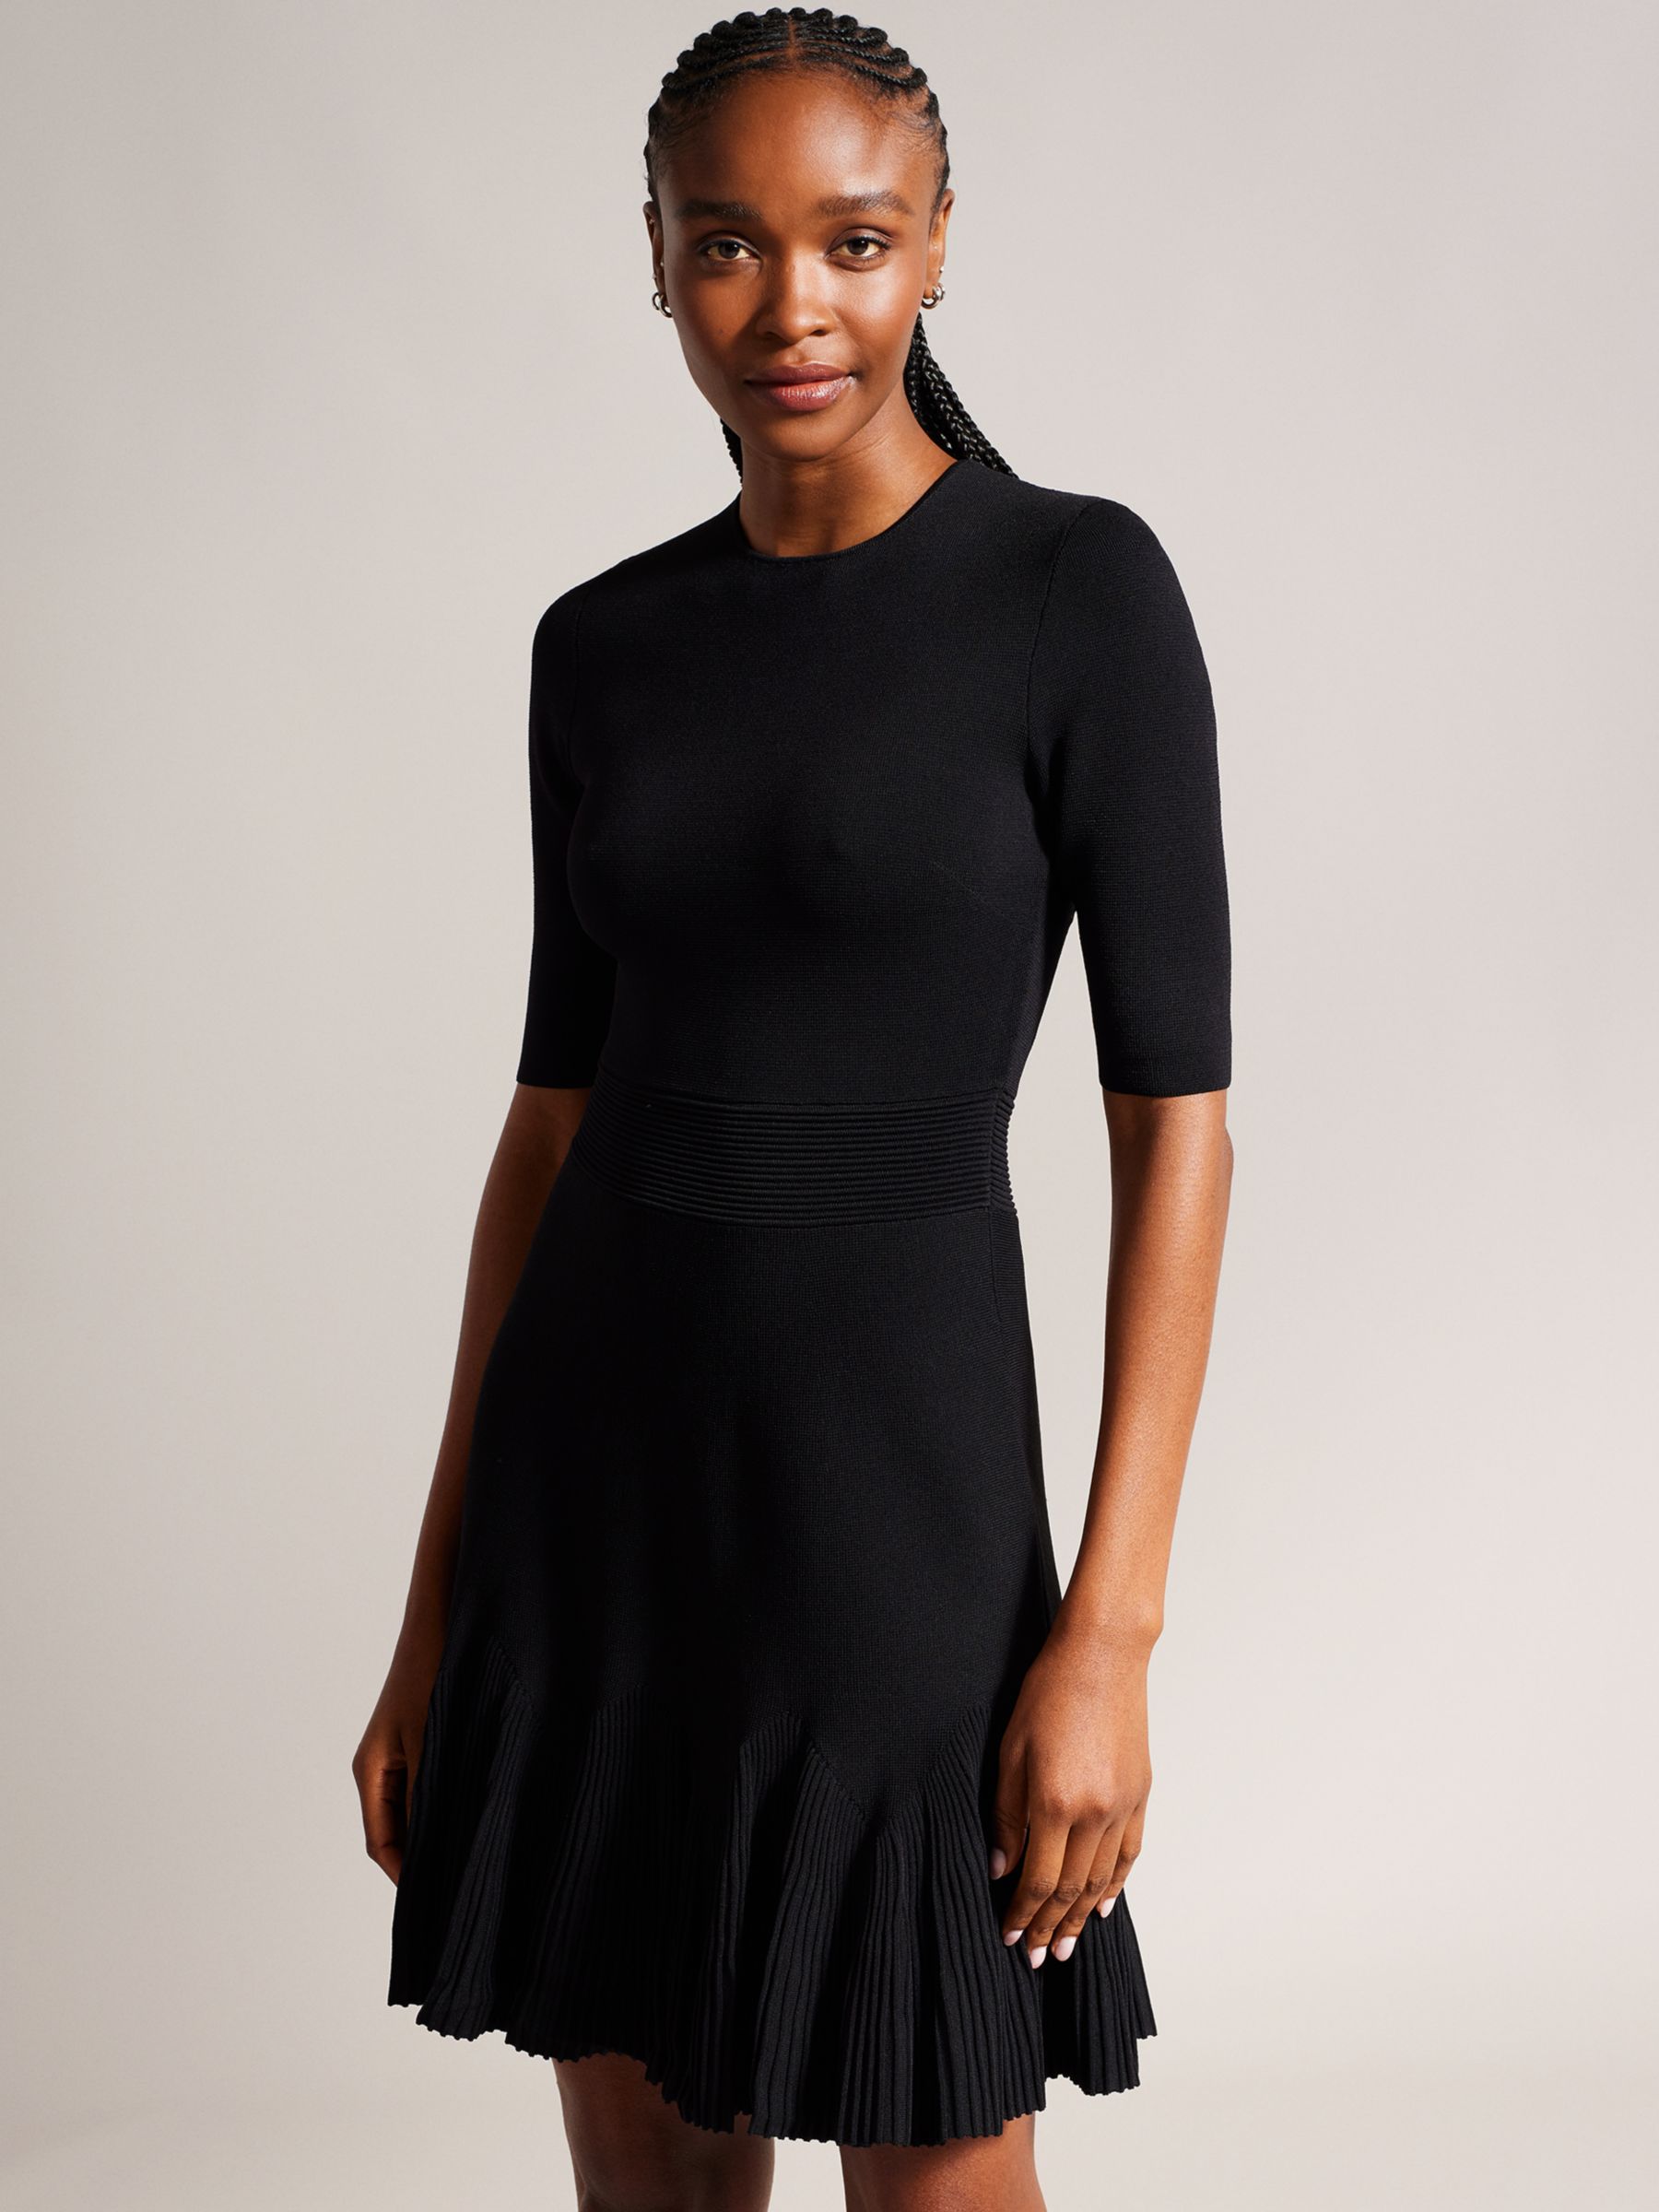 Ted Baker Josafee Flared Mini Dress, Black at John Lewis & Partners